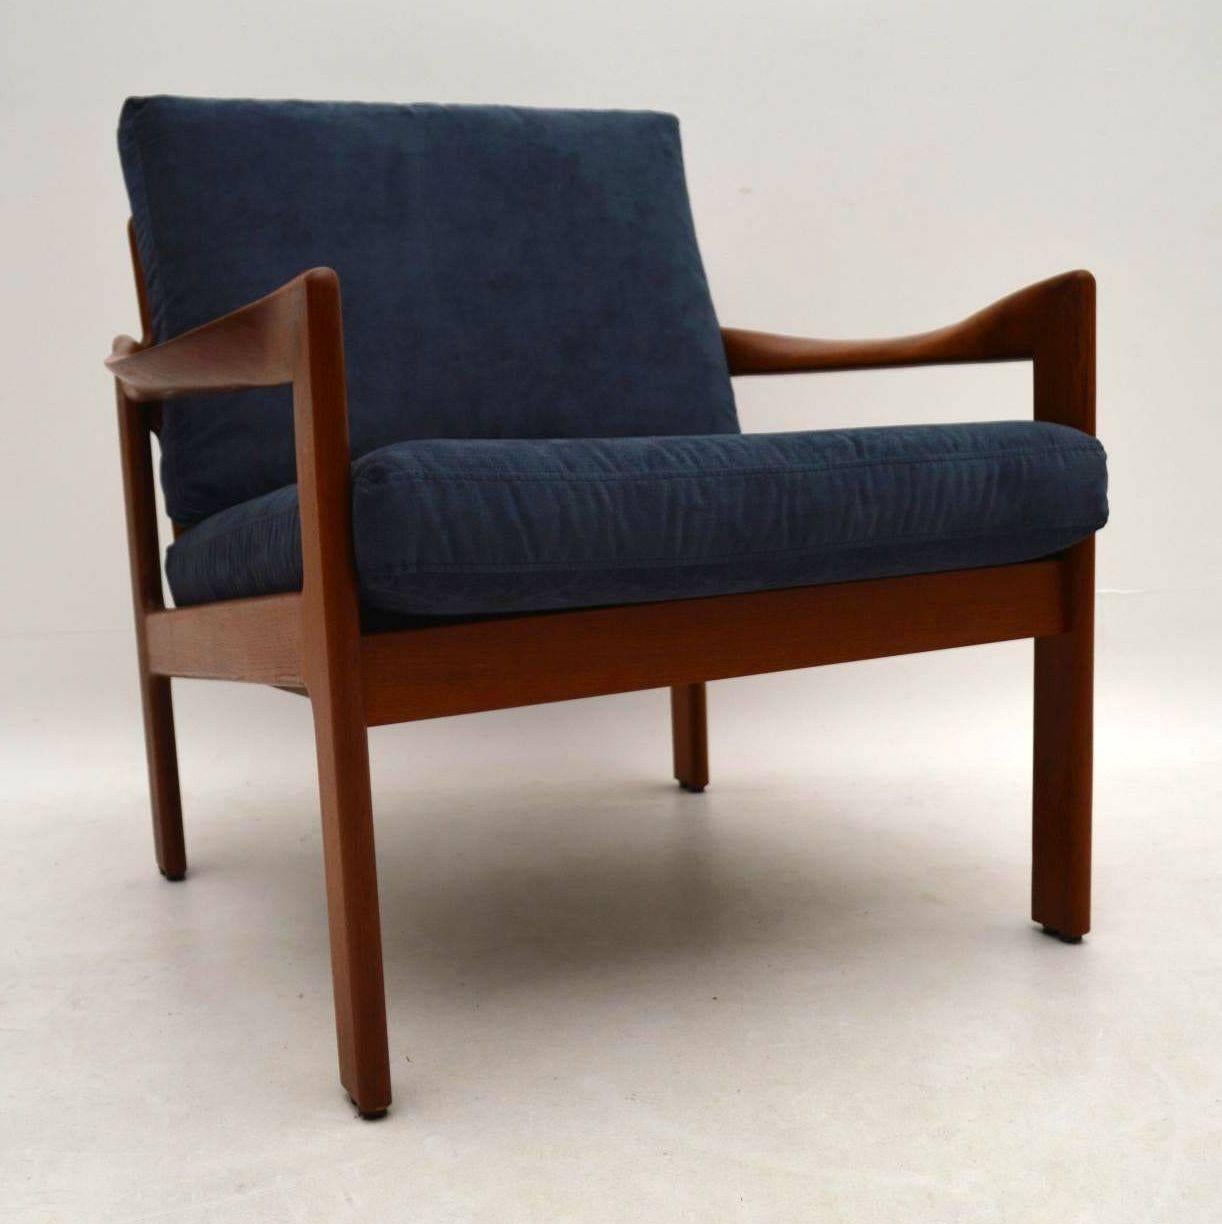 Mid-Century Modern 1960s Danish Teak Vintage Armchair by Illum Wikkelso for Niels Eilersen